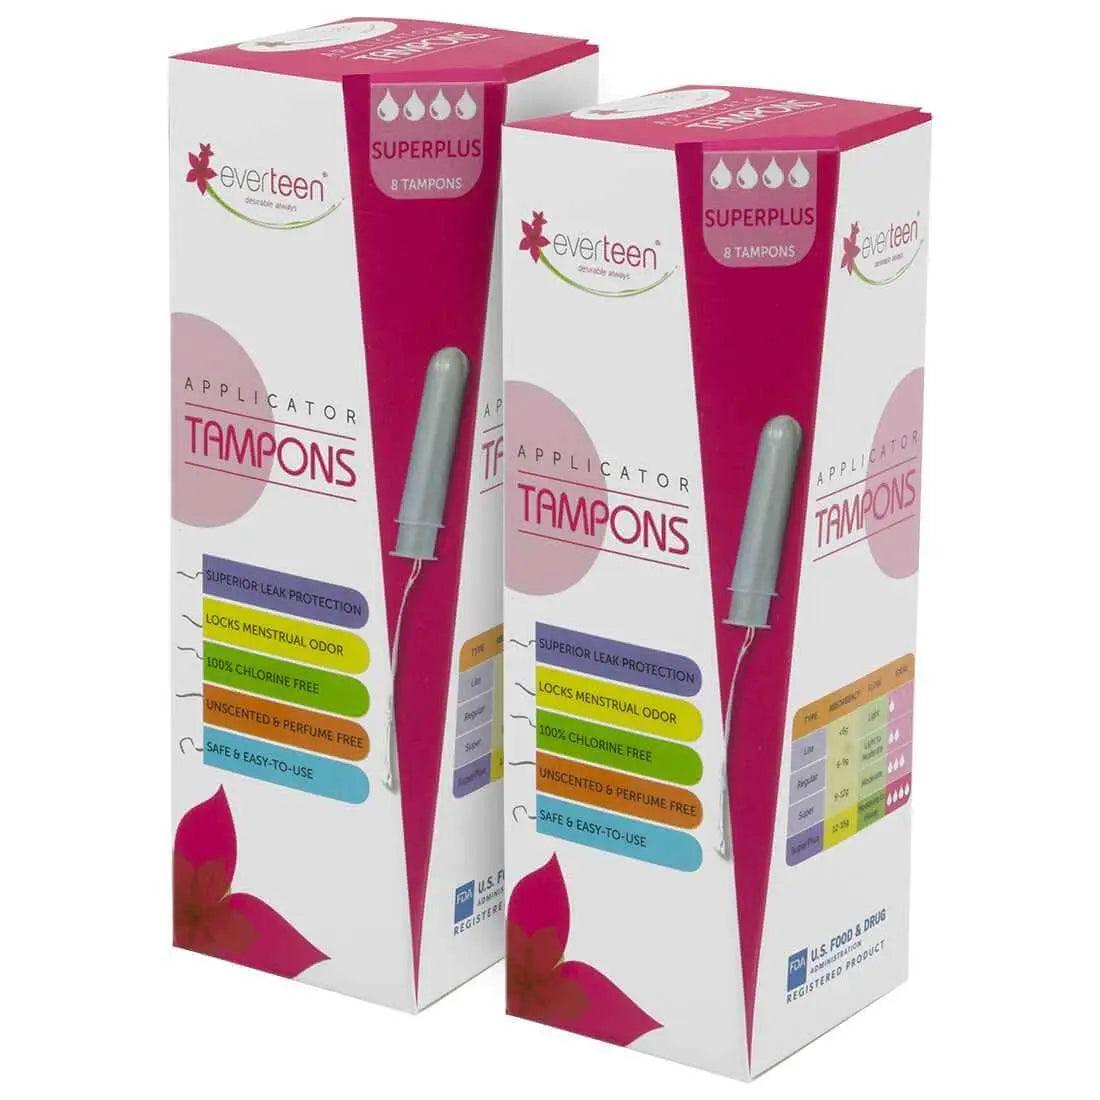 everteen Applicator Tampons for Menstrual Periods in Women 8903540009279